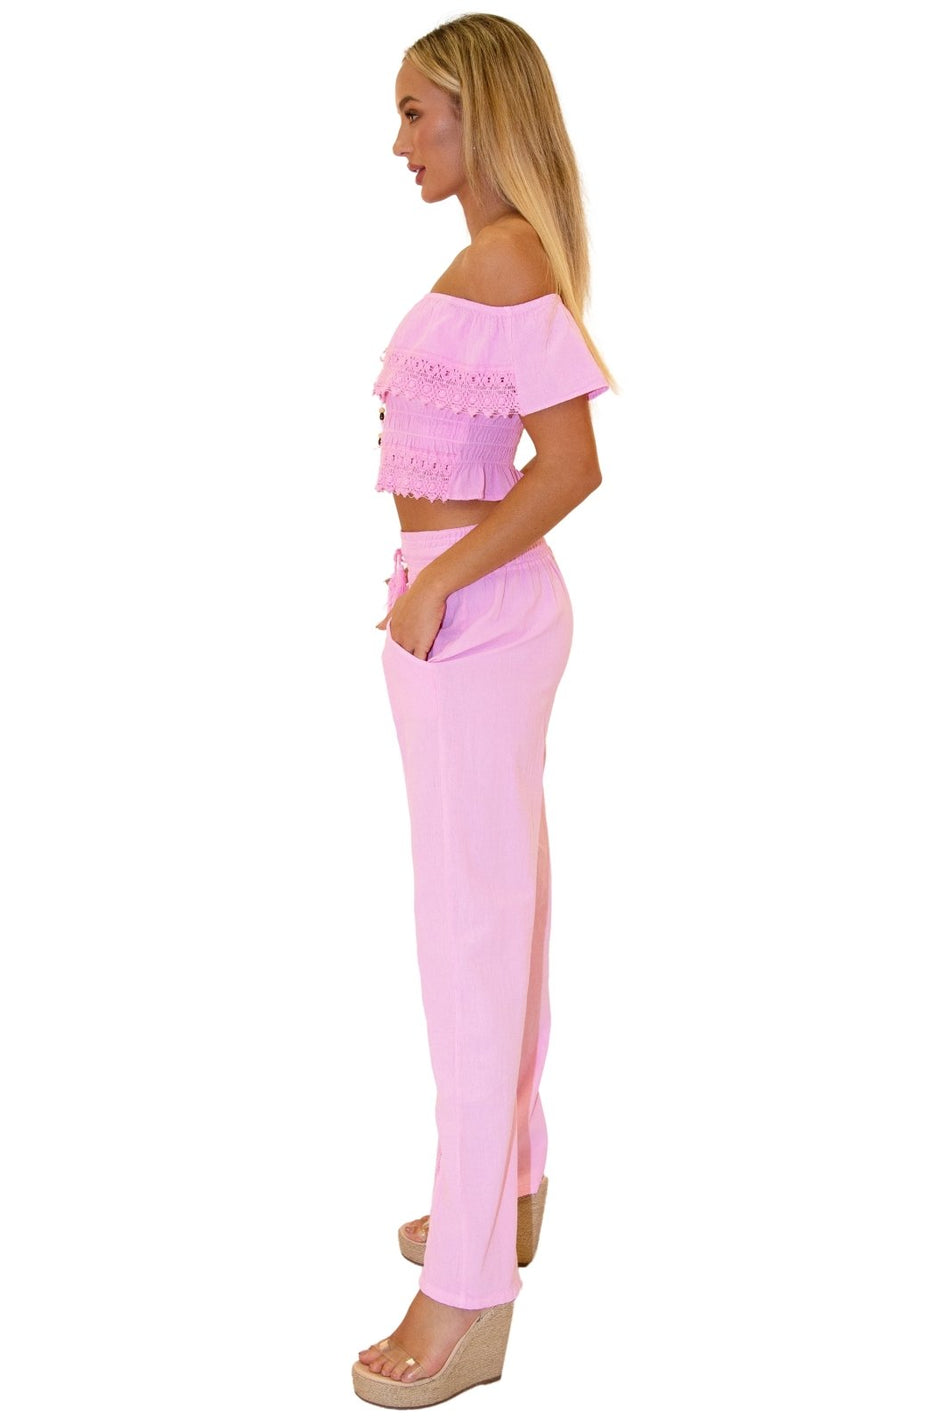 Magnolia' Crochet Front Detail Pants Pink - Seaspice Resort Wear